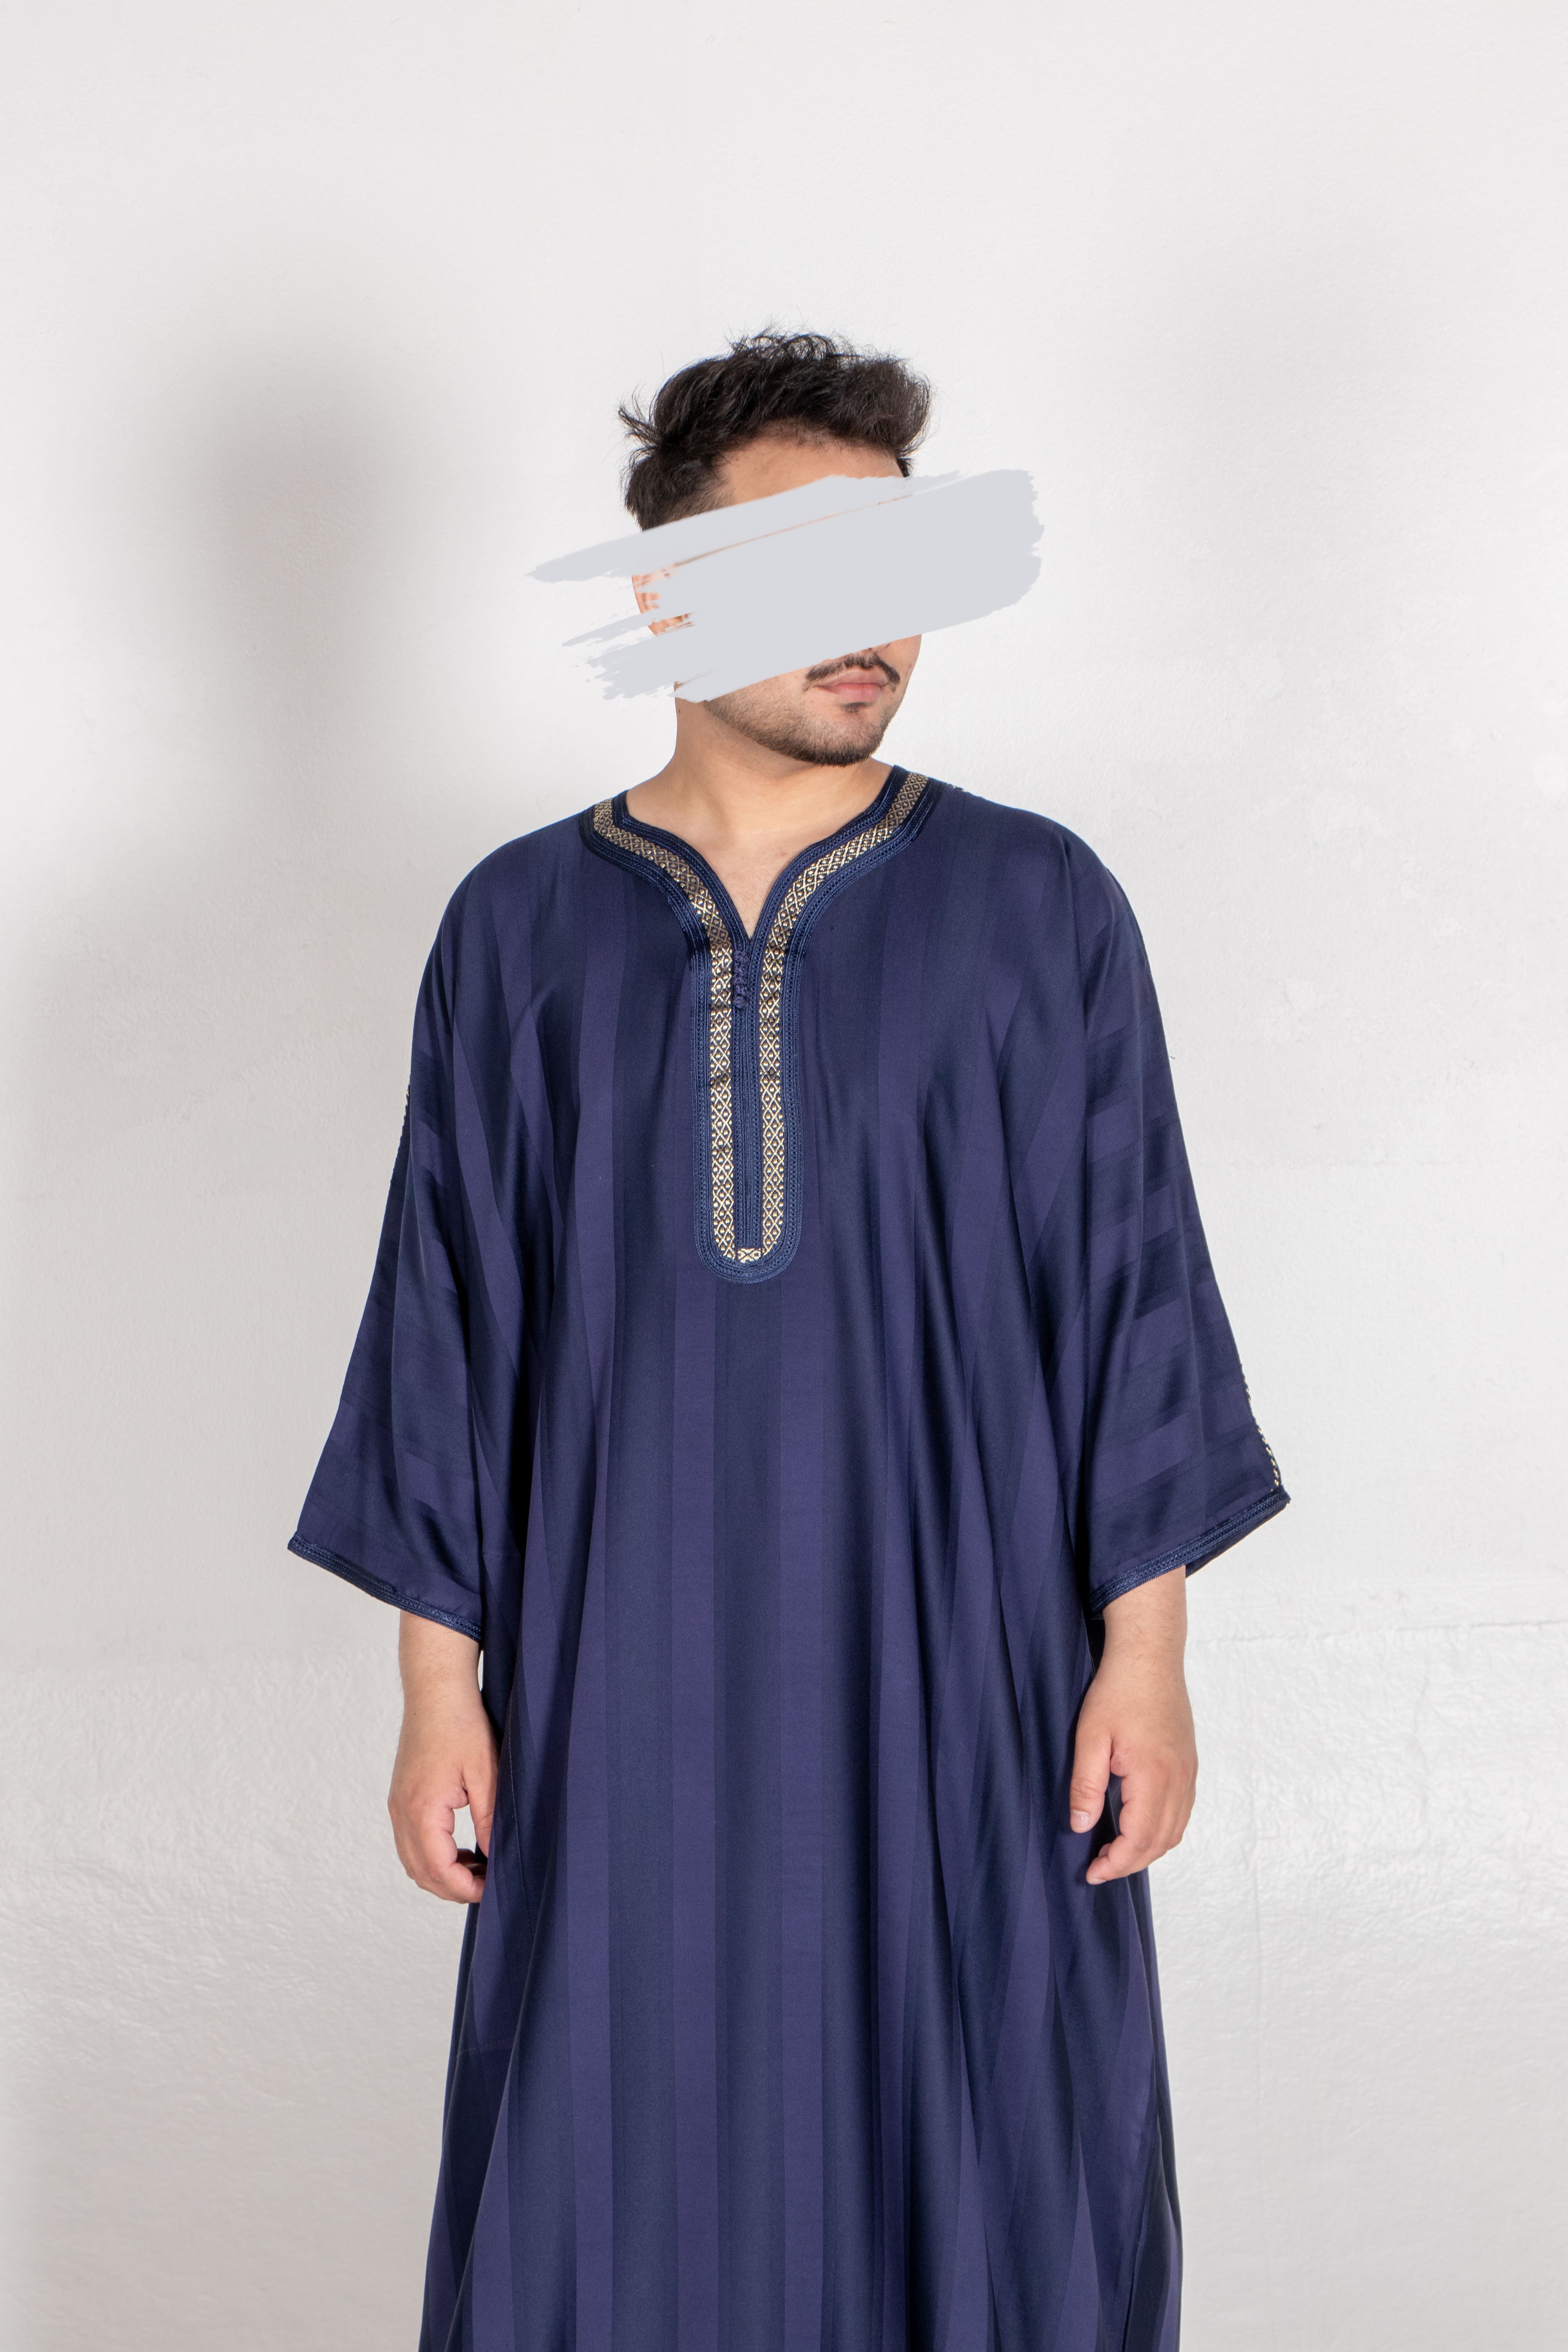 Moroccan Dark Blue Thobe - Jalabiya - Muslim Lifestyle Store